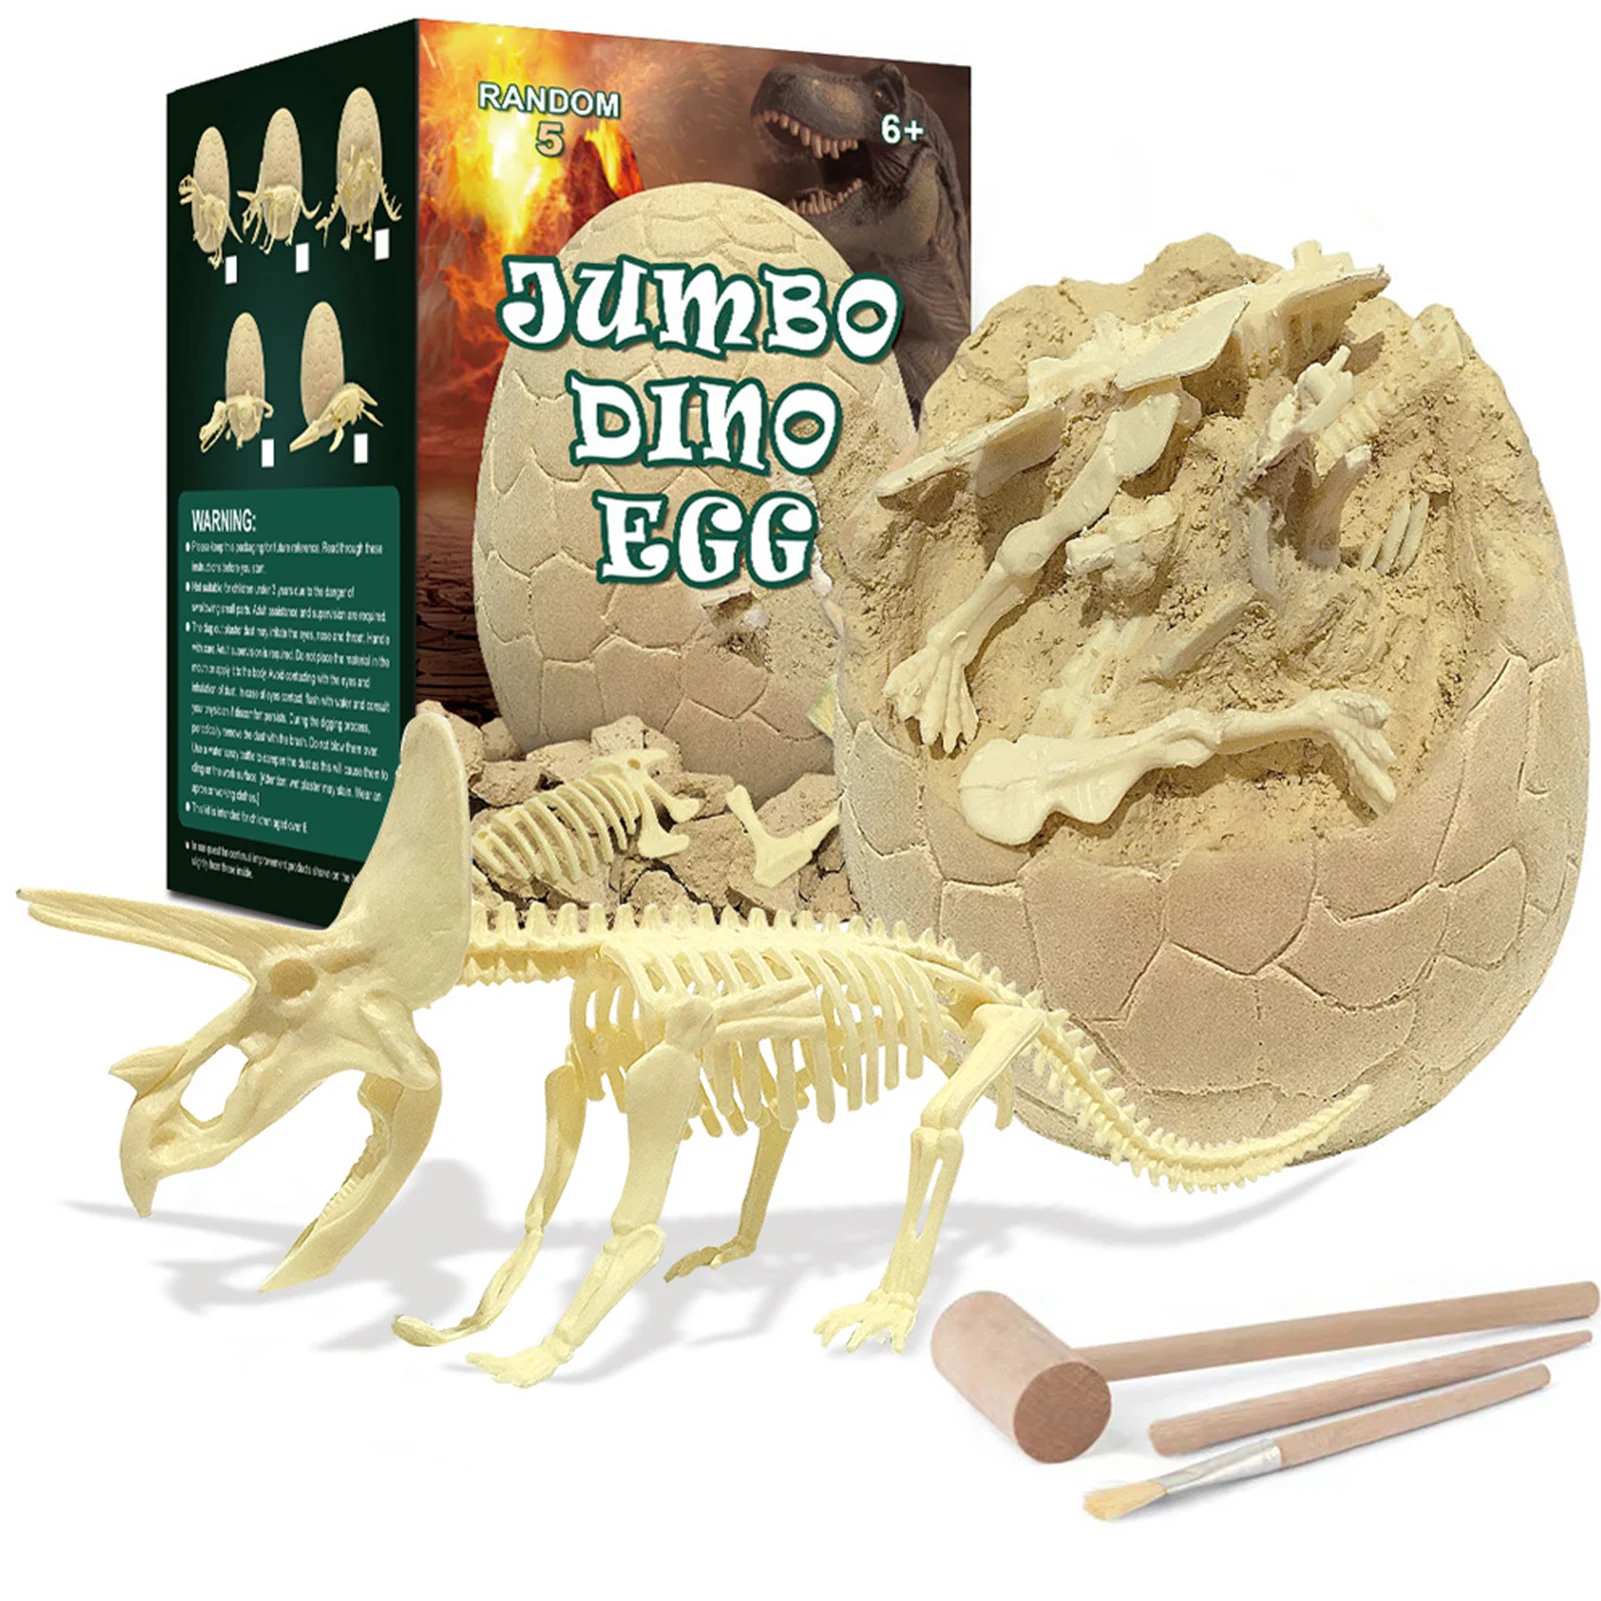 

Dinosaur Eggs Dig Kit Dinosaur Eggs Excavation Kits Archaeology Paleontology Educational Science Gift For Age 4-12 STEM Science